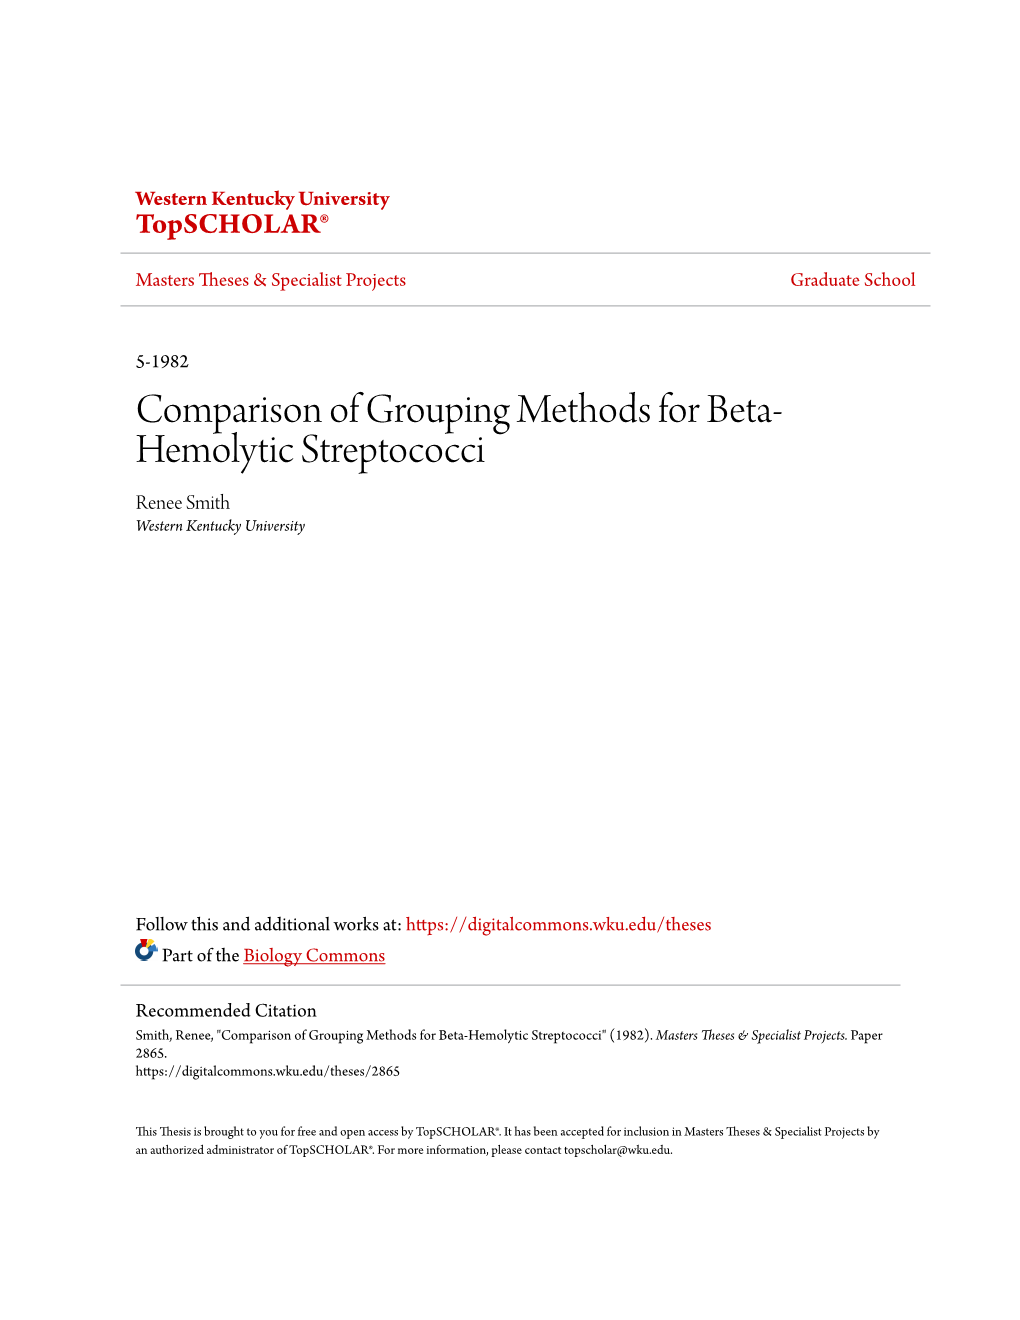 Comparison of Grouping Methods for Beta-Hemolytic Streptococci" (1982)